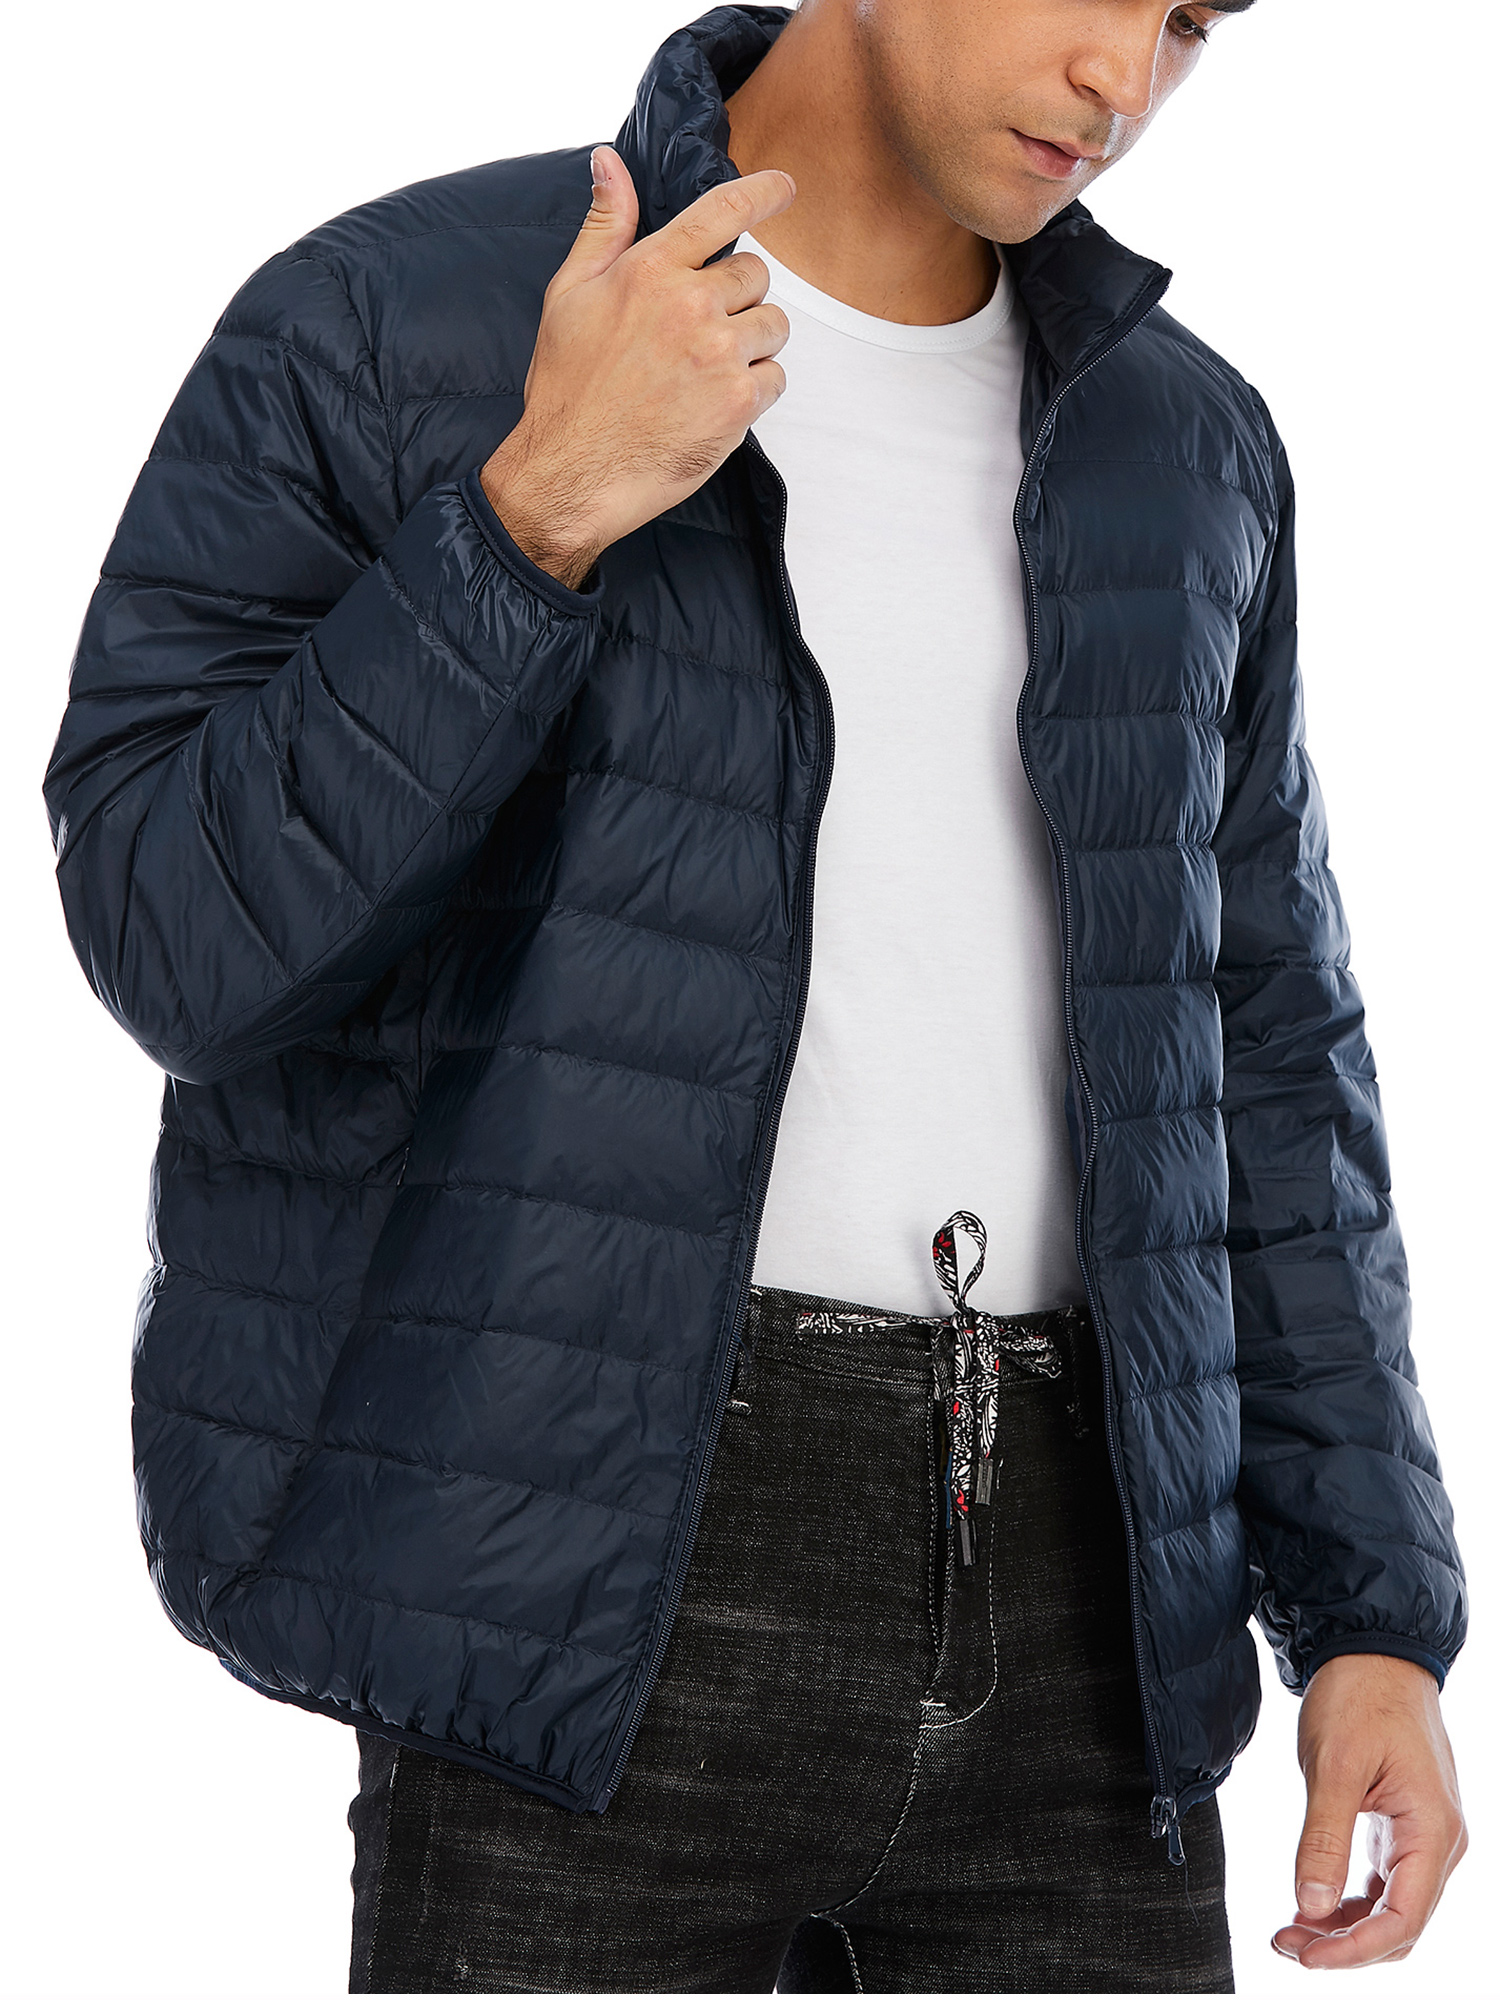 FOCUSSEXY Mens Down Jacket, Light Weight Puffer Coat for Men, Men's Down Puffer Jacket Packable Puffer Jacket Windproof Zip Up Warm Coat Outerwear - image 1 of 7